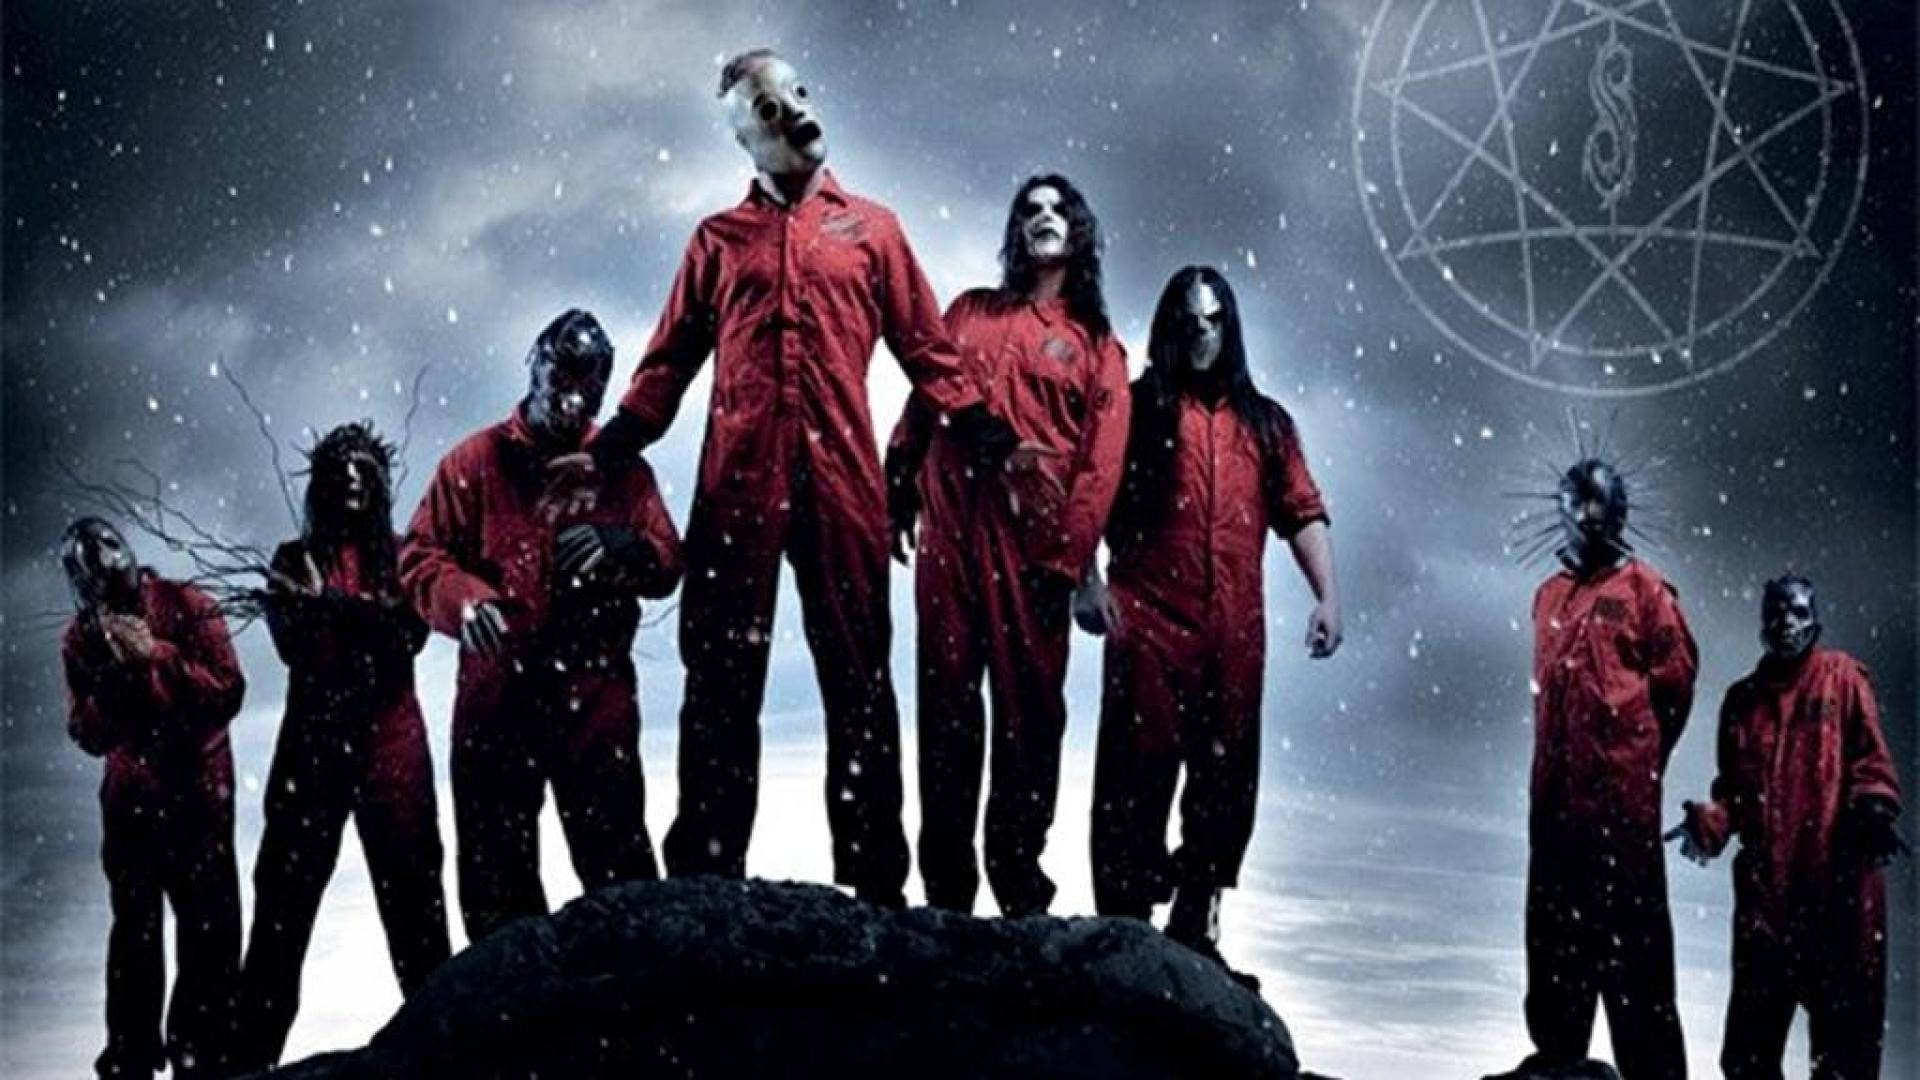 Slipknot Members In Prisoner Suit Background